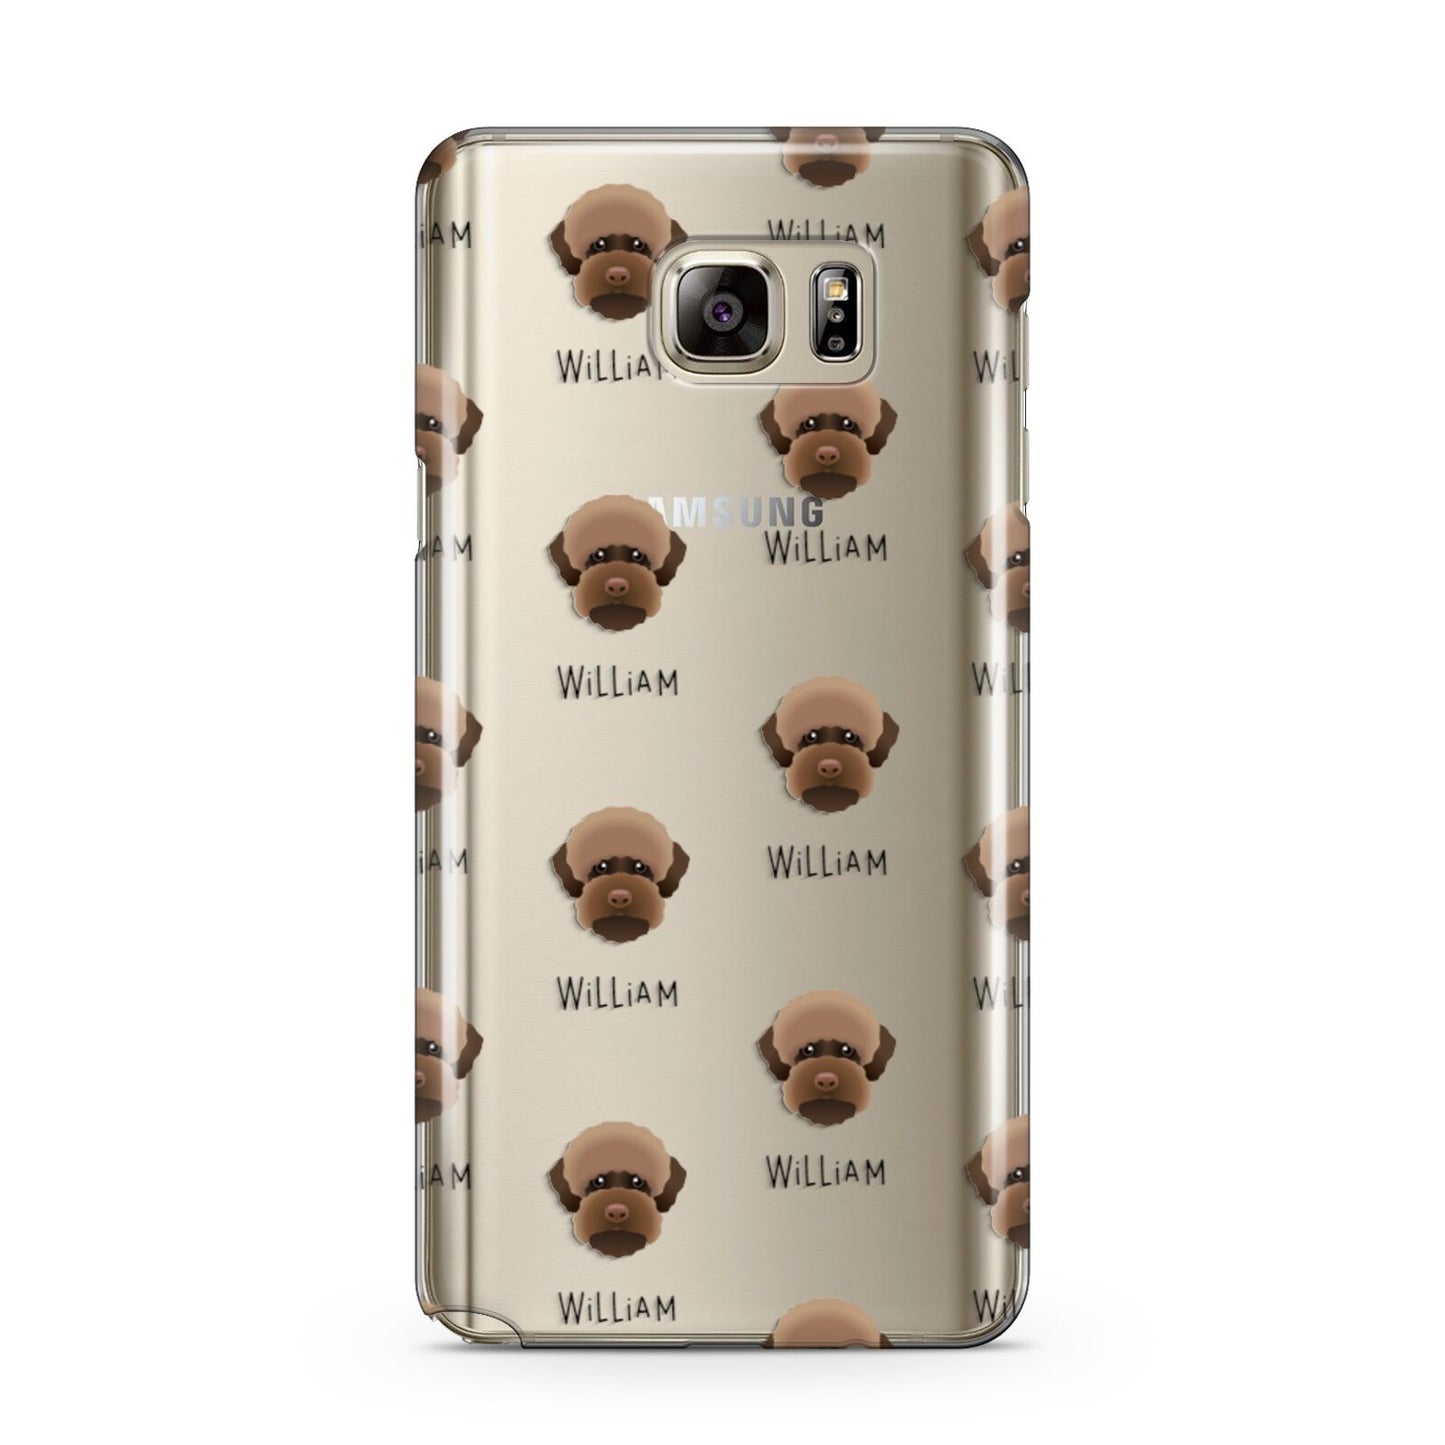 Lagotto Romagnolo Icon with Name Samsung Galaxy Note 5 Case